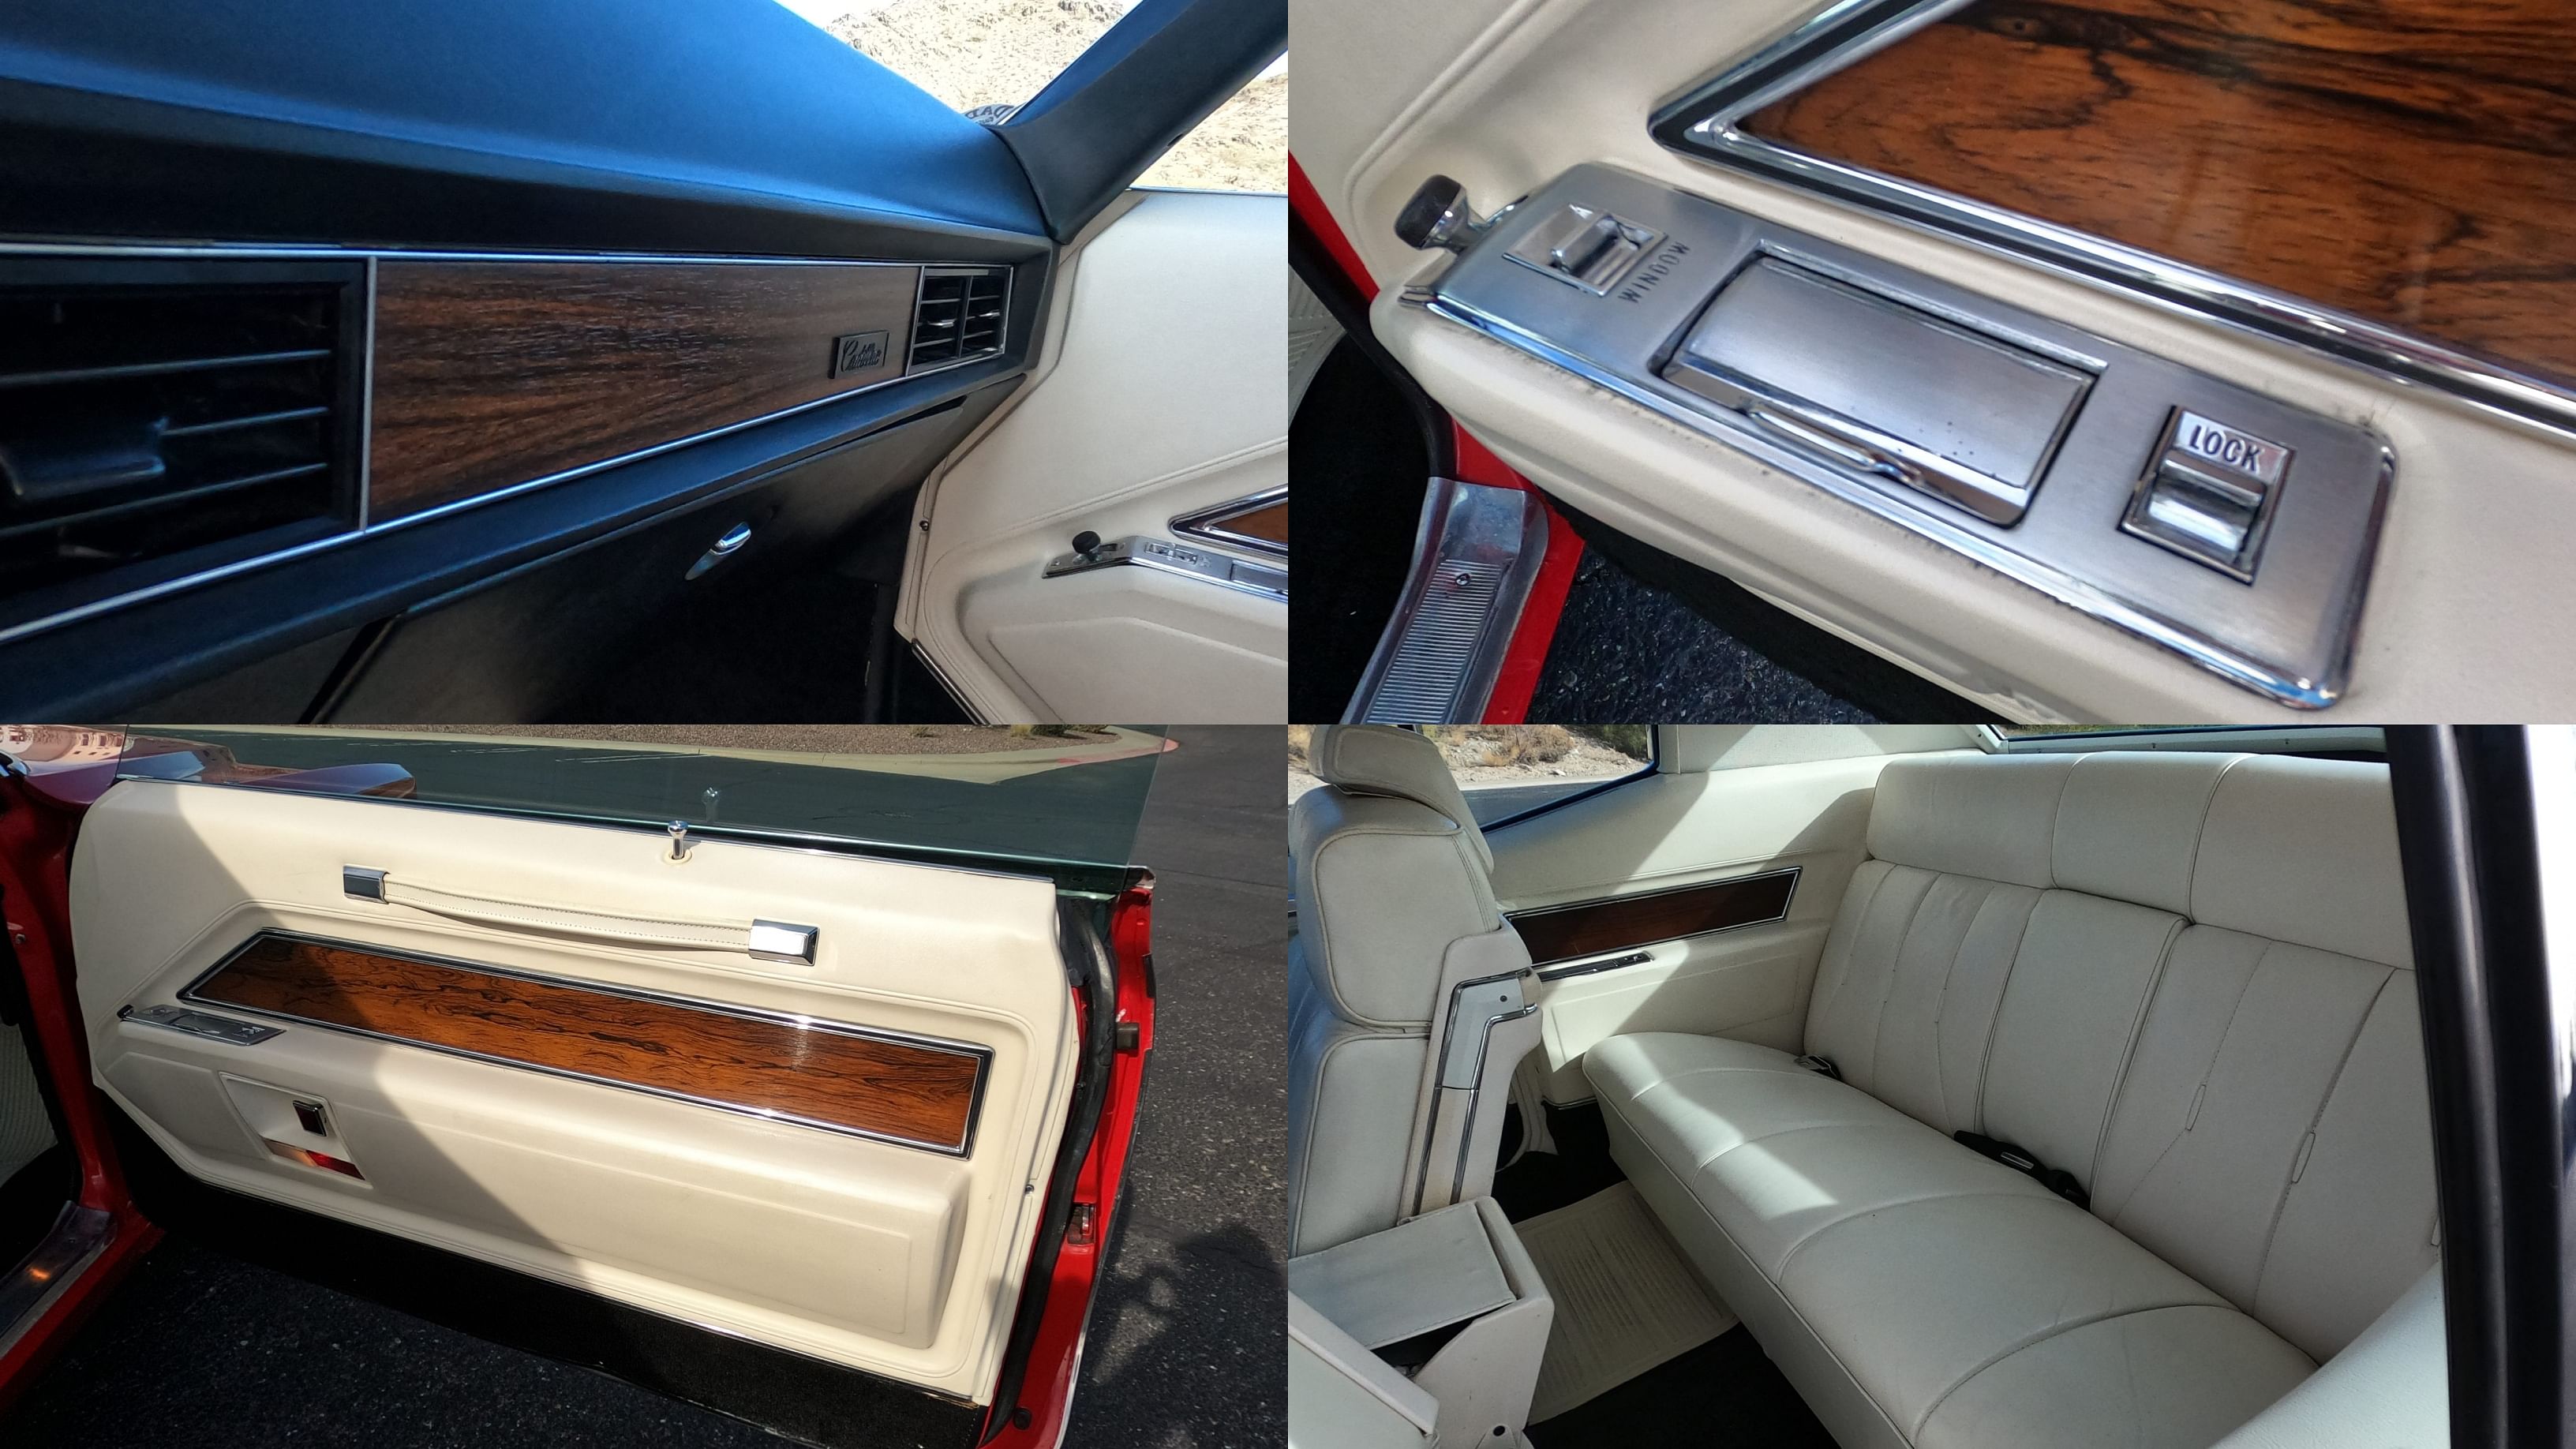 1969 Cadillac Coupe DeVille wood interior trim, door panel, rear seats